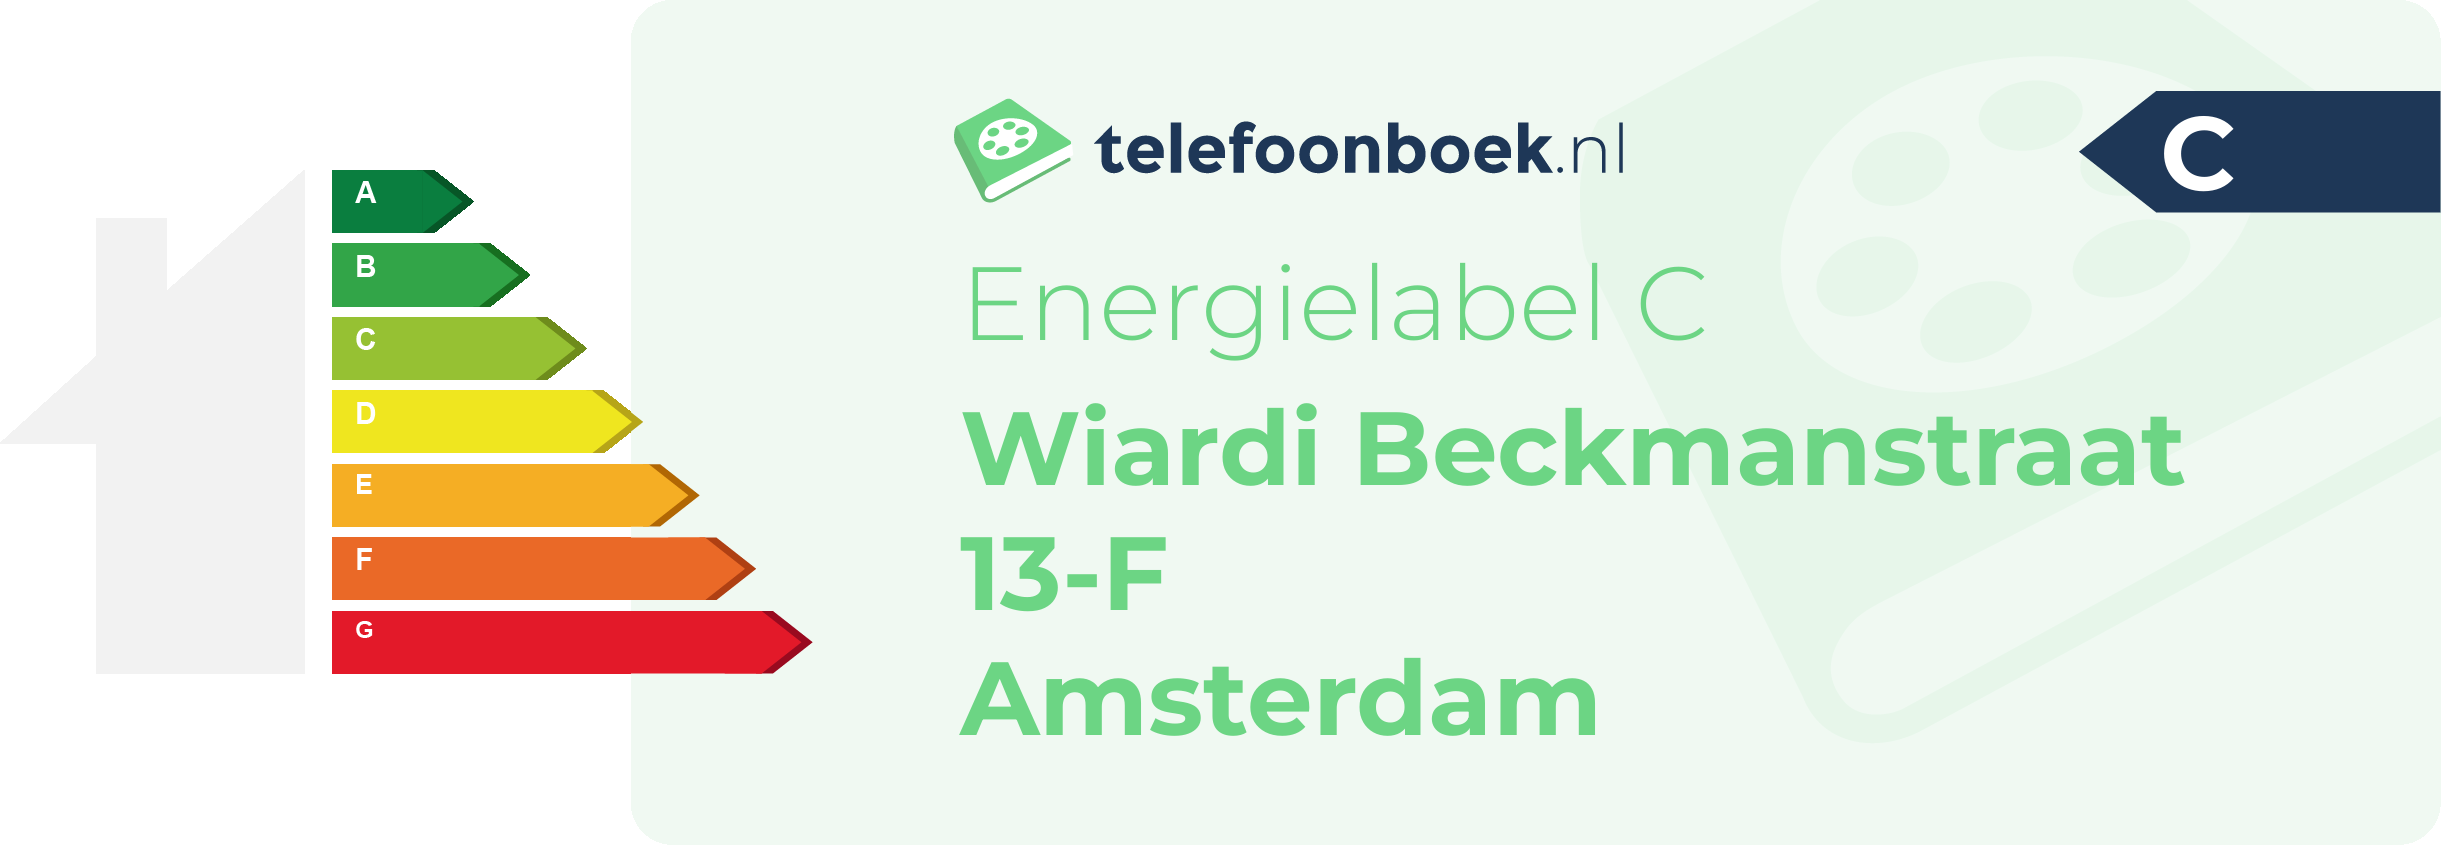 Energielabel Wiardi Beckmanstraat 13-F Amsterdam